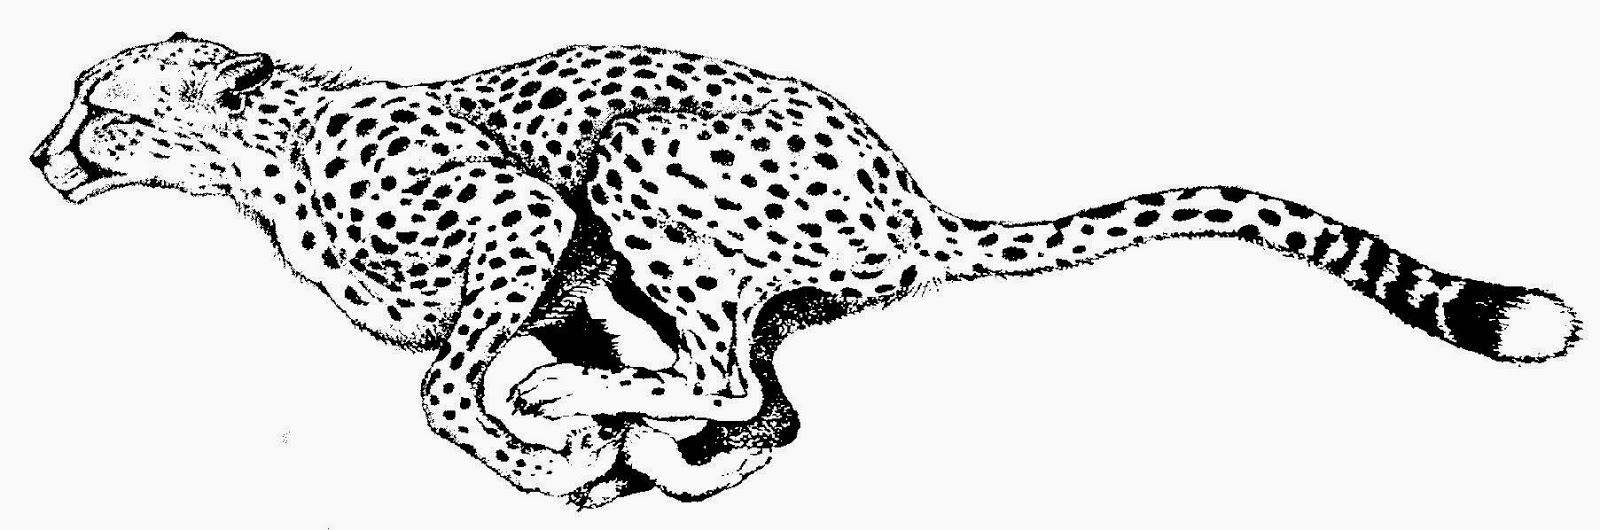 Cheetah Print Black And White Kid Clipart